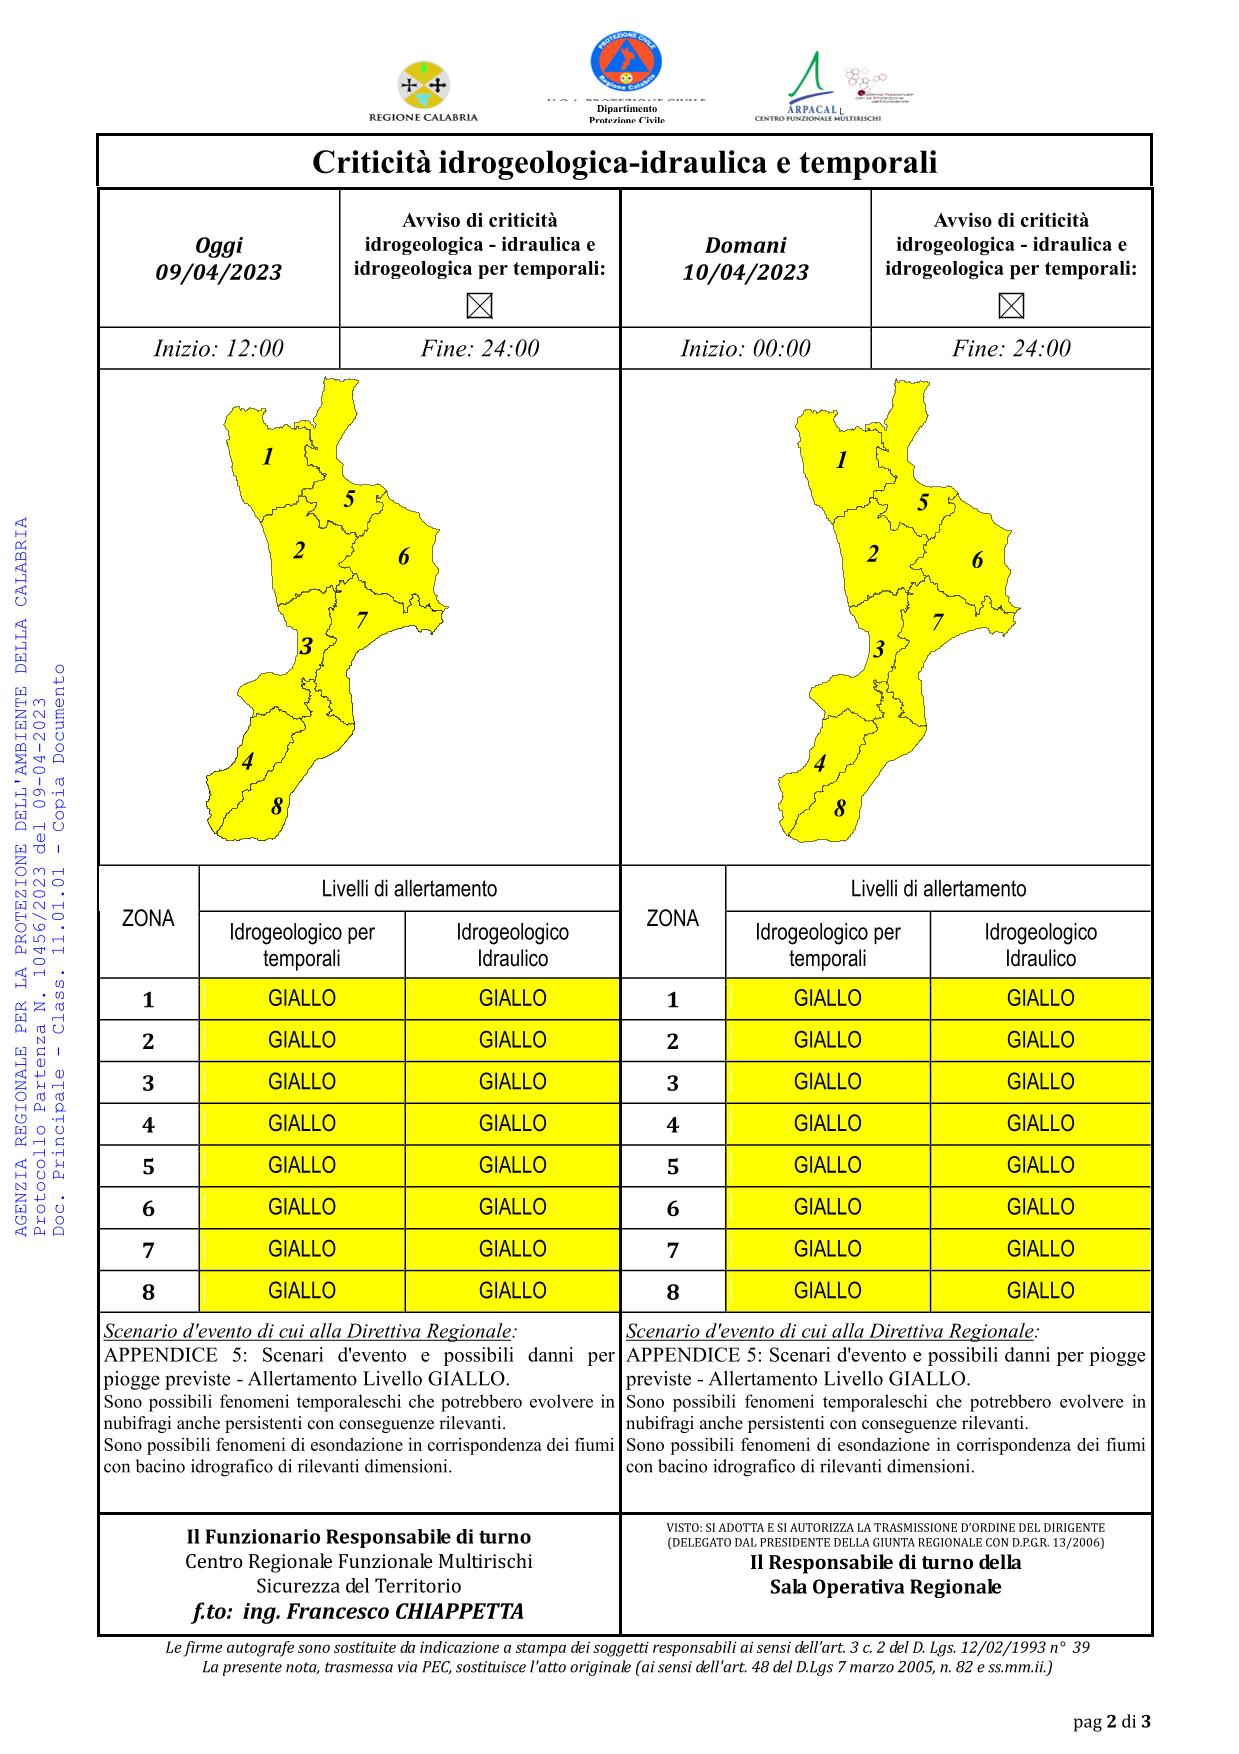 Criticità idrogeologica-idraulica e temporali in Calabria 09-04-2023